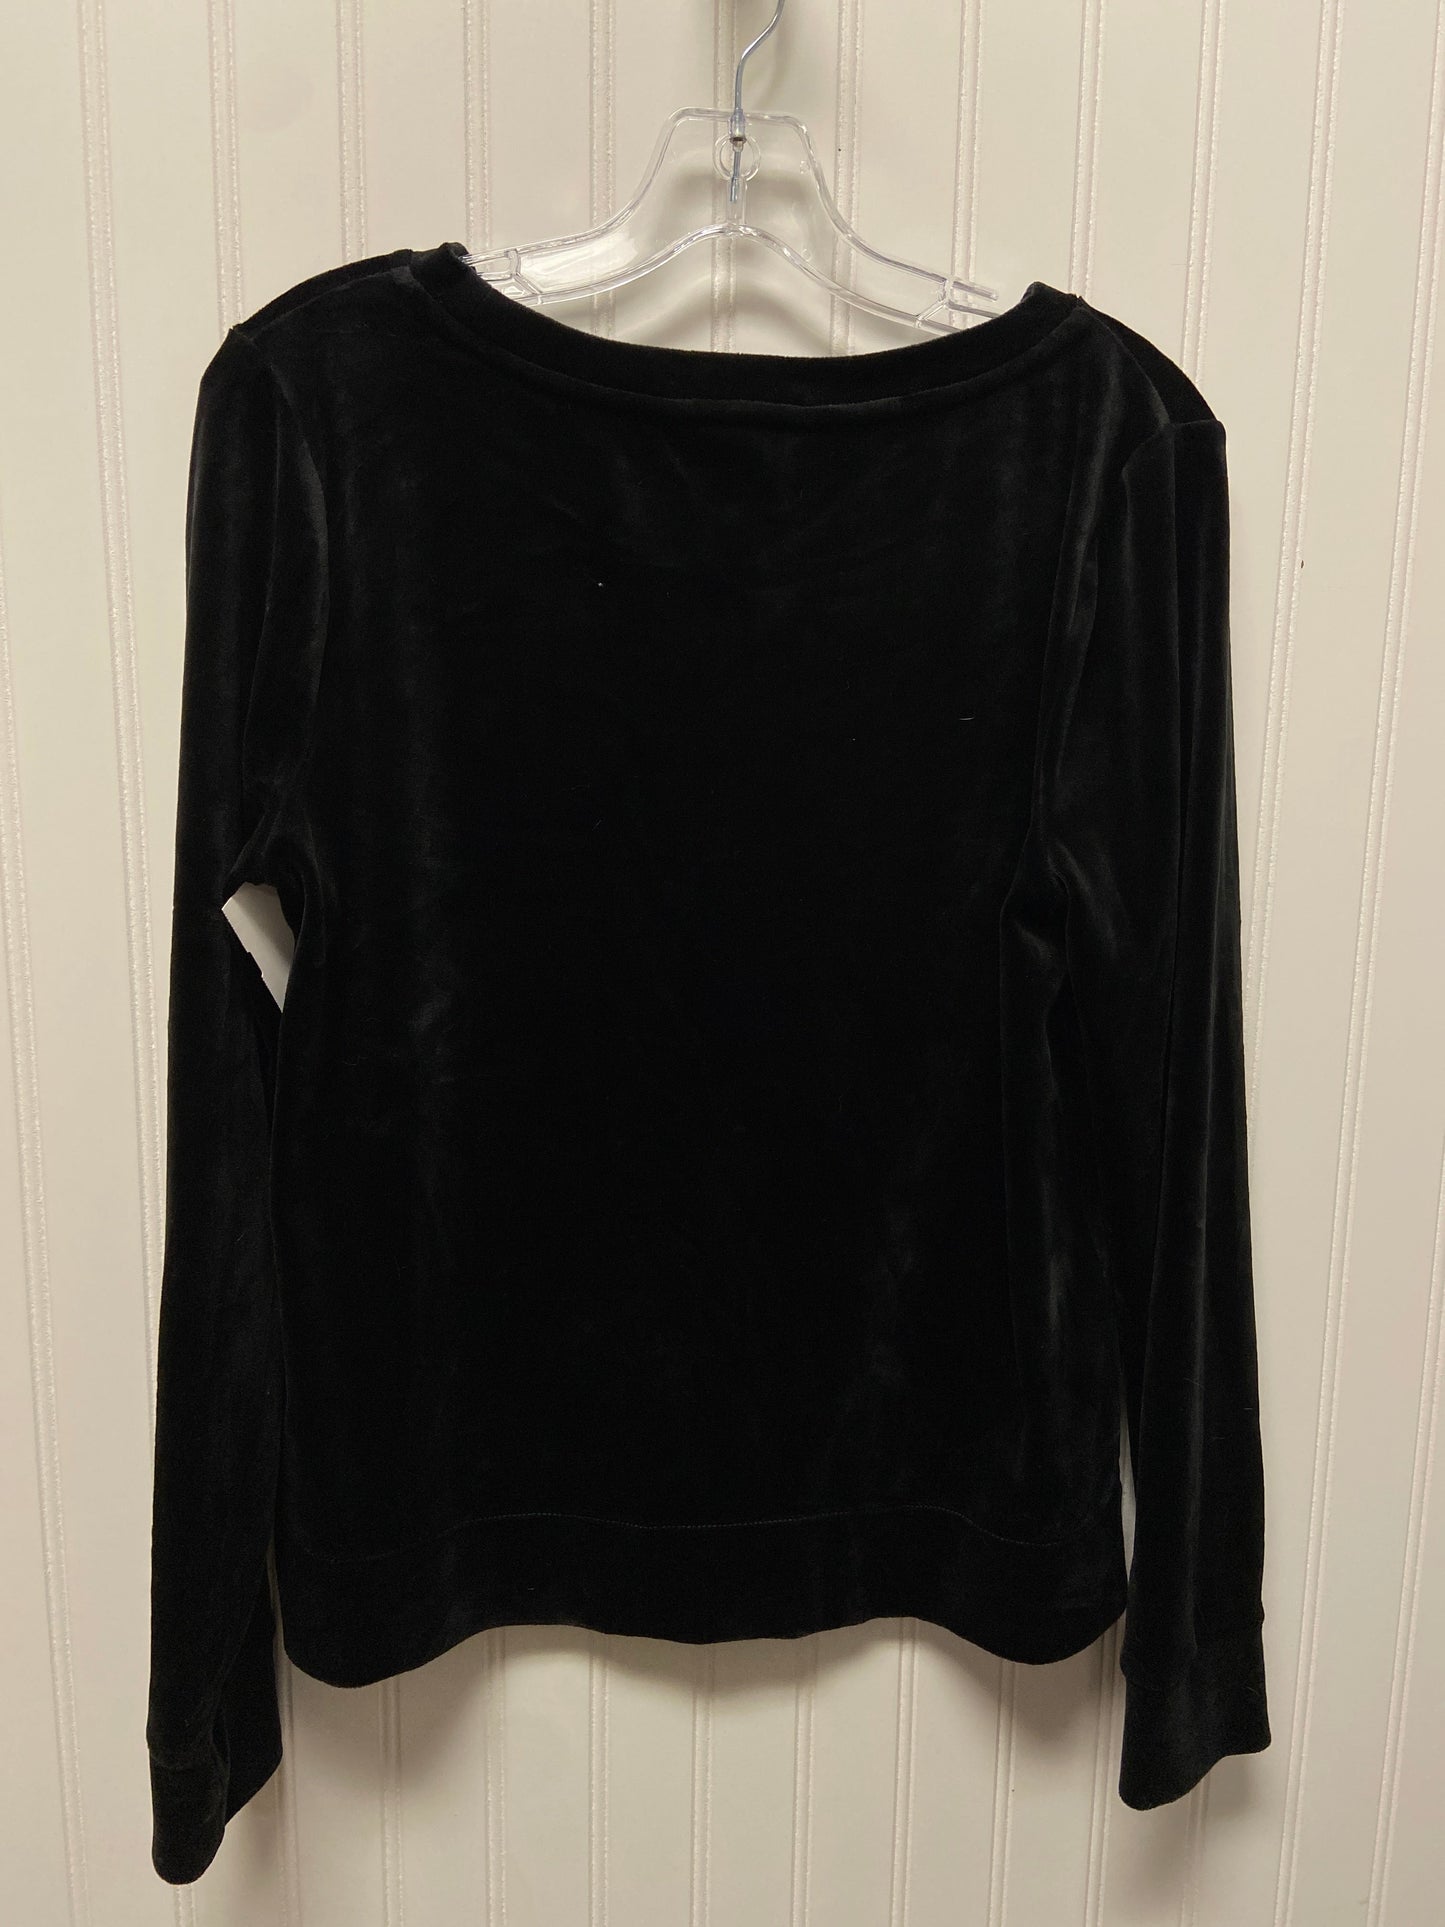 Black Sweater Designer Lilly Pulitzer, Size M